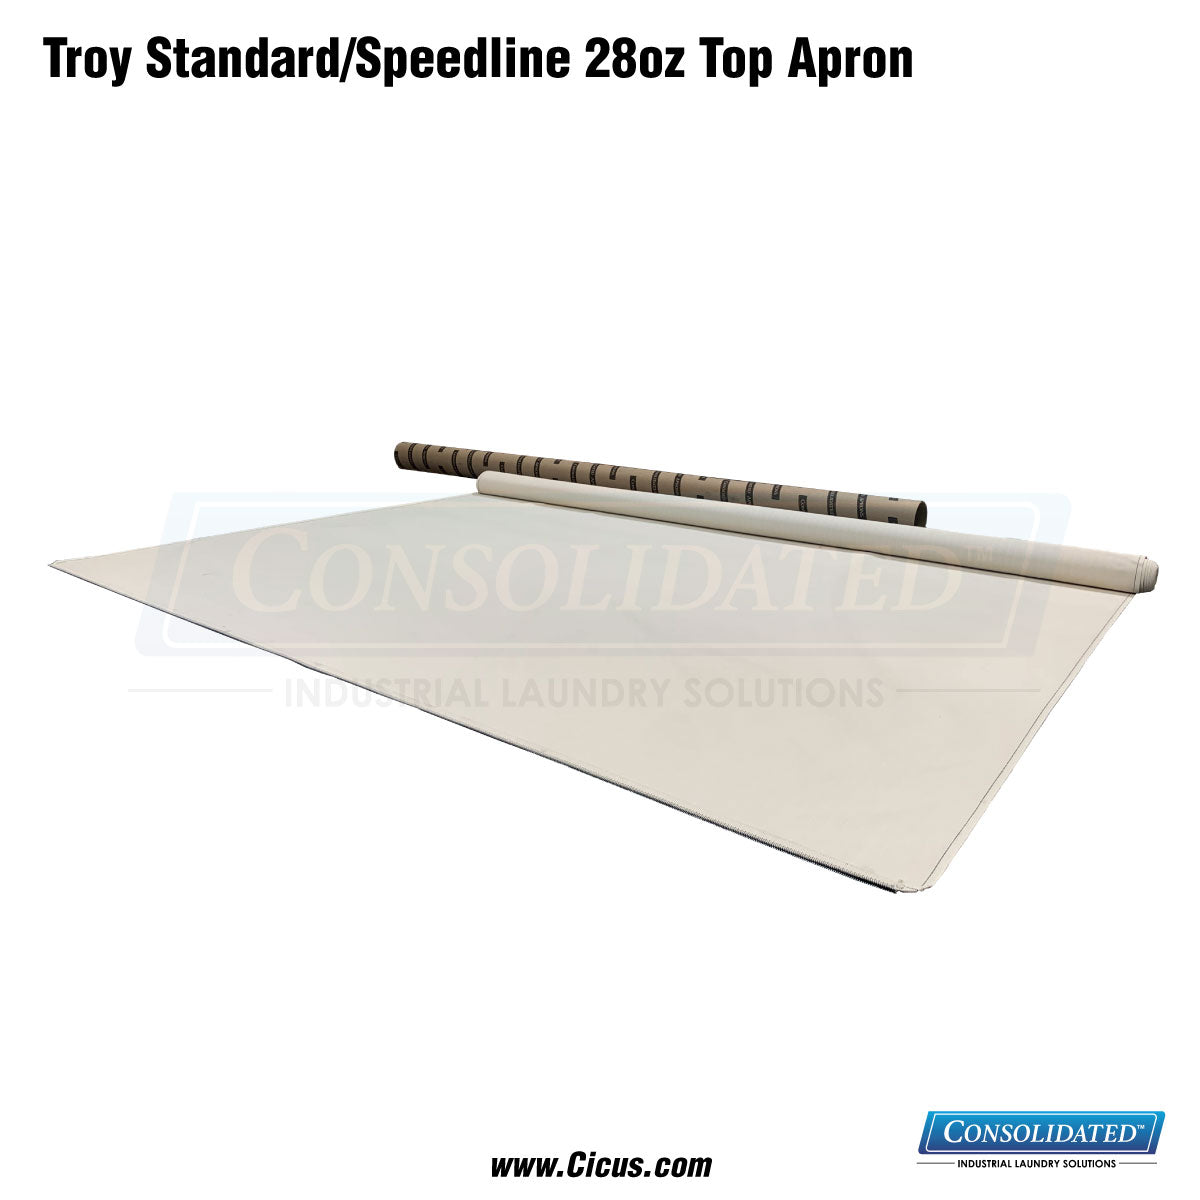 Troy Standard/Speedline Ironer Apron